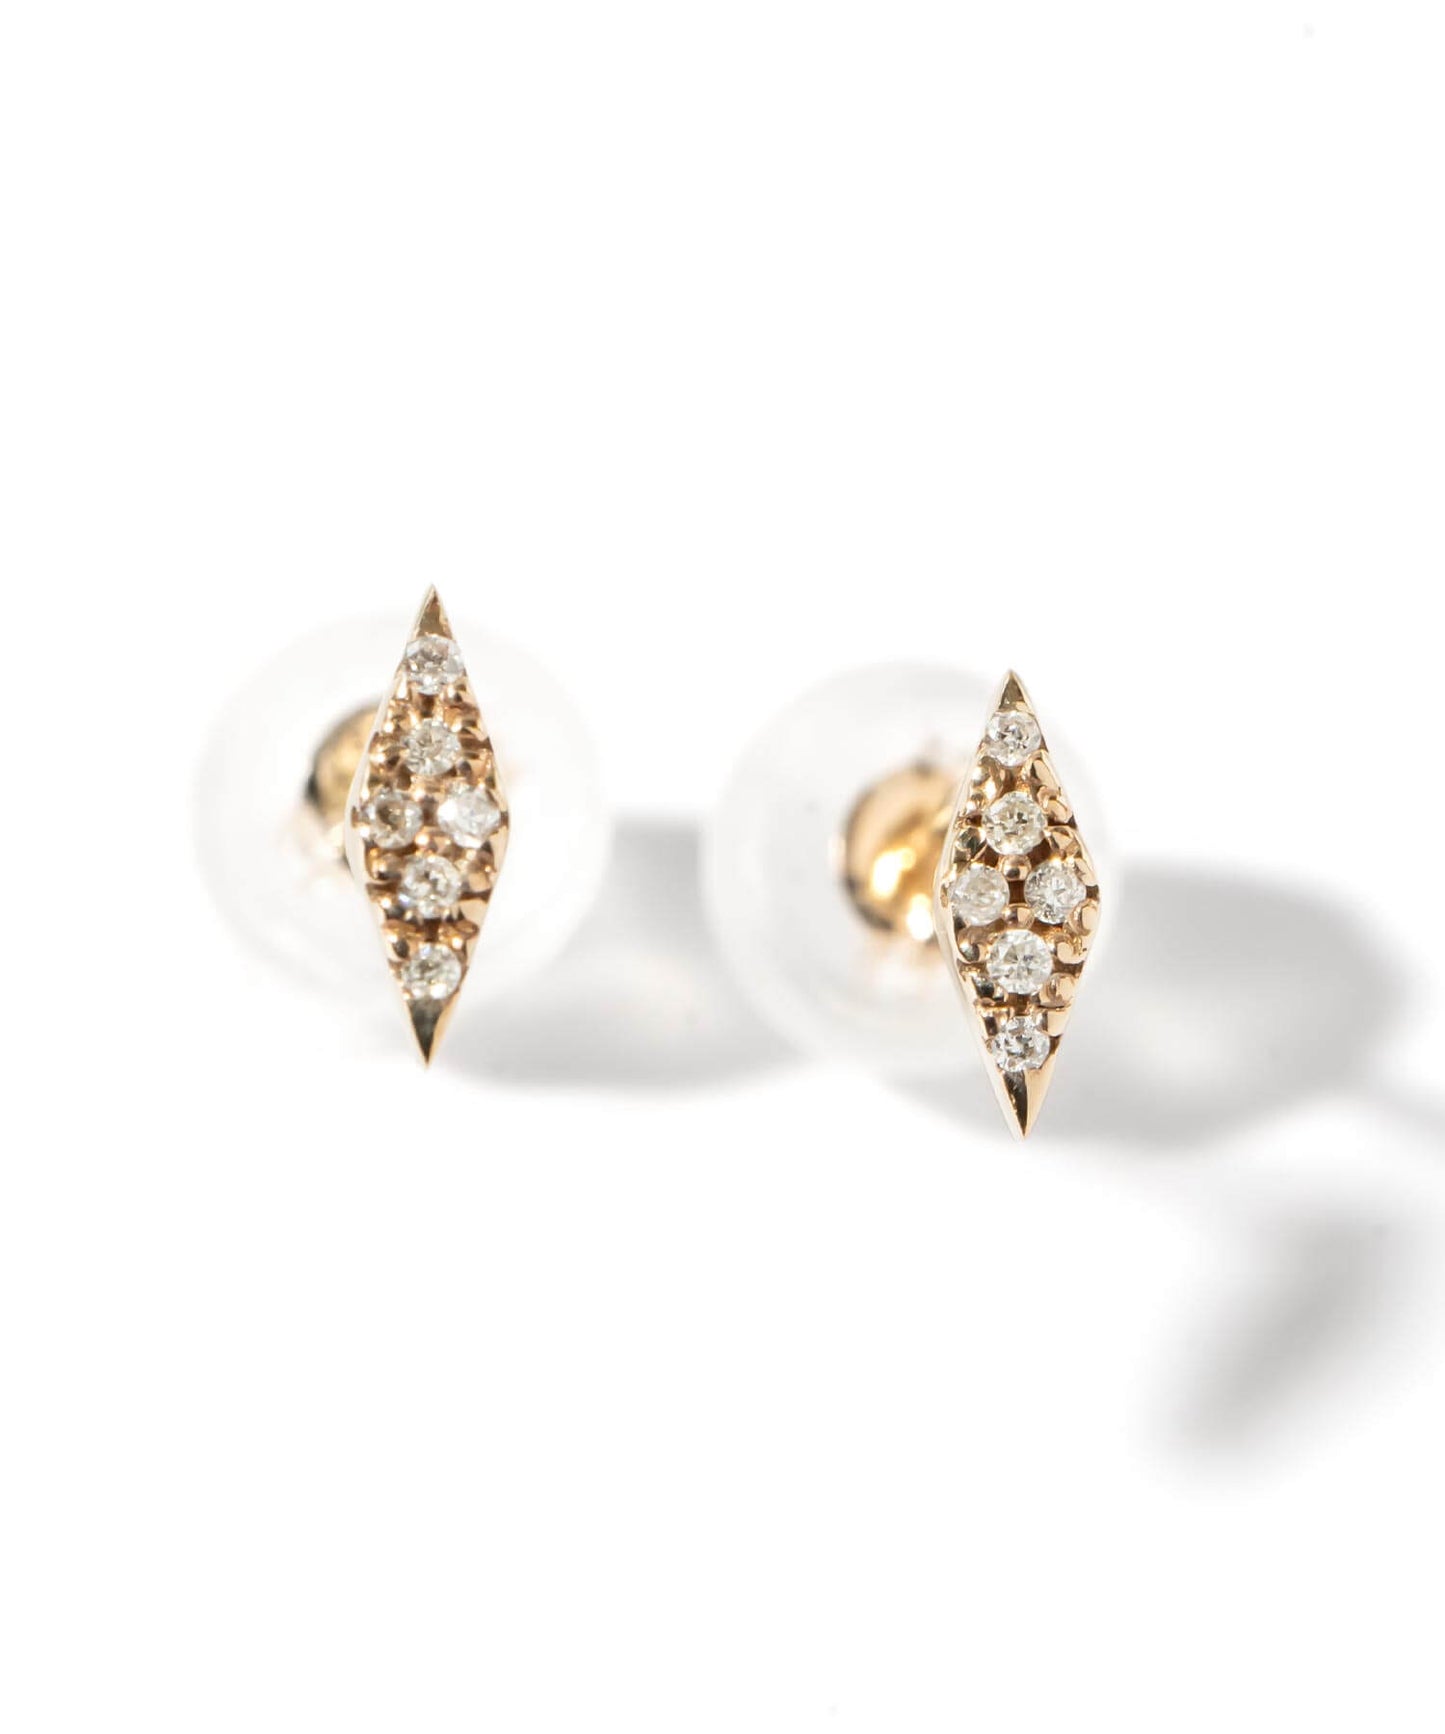 K10 Pave Diamond Rhombus Earrings | FOSTELLA PIERCE